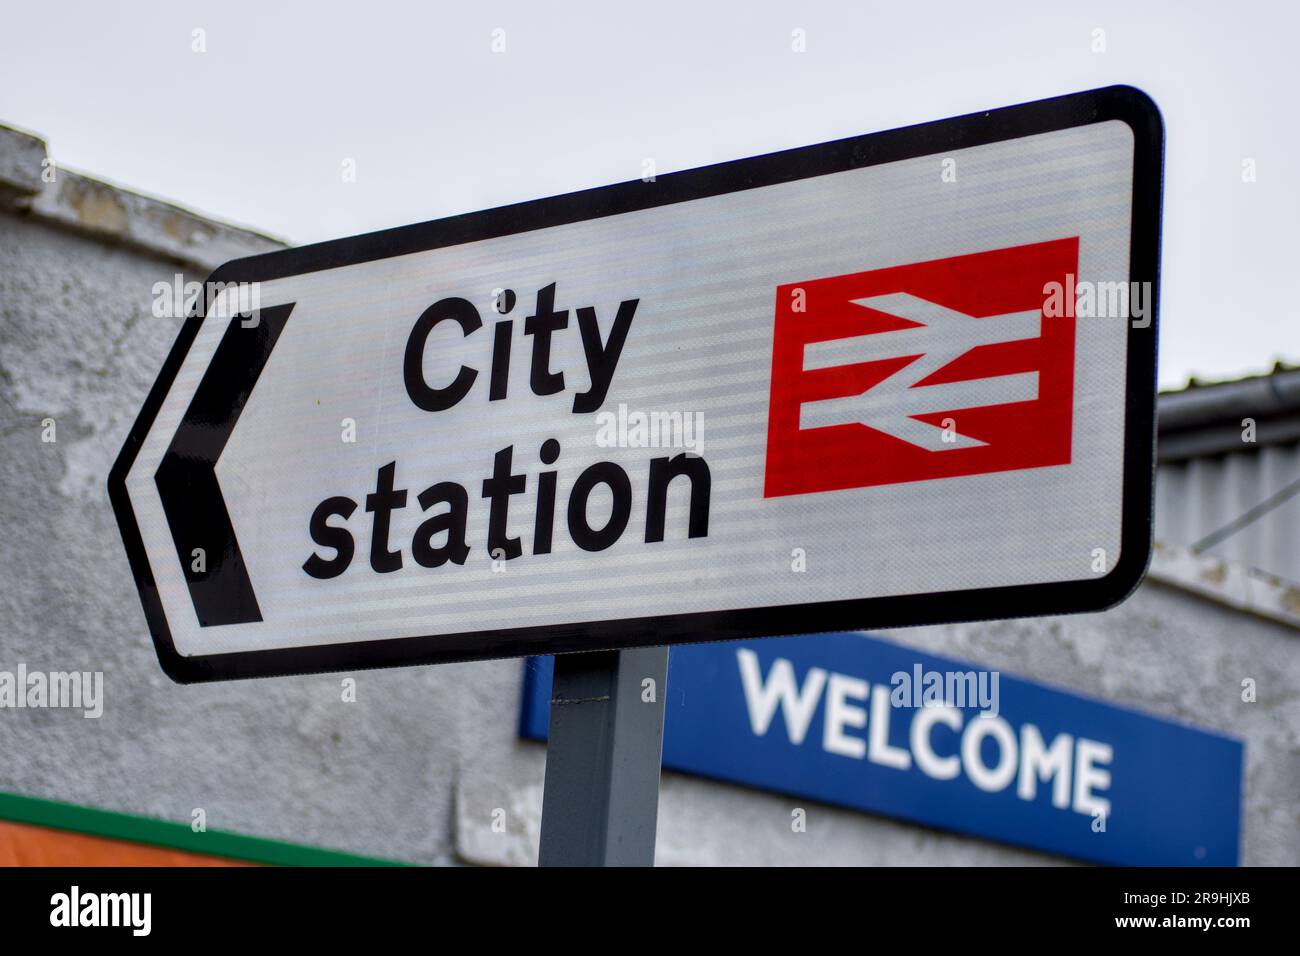 City Station direction sign, St.Albans, Hertfordshire, England, UK Stock Photo